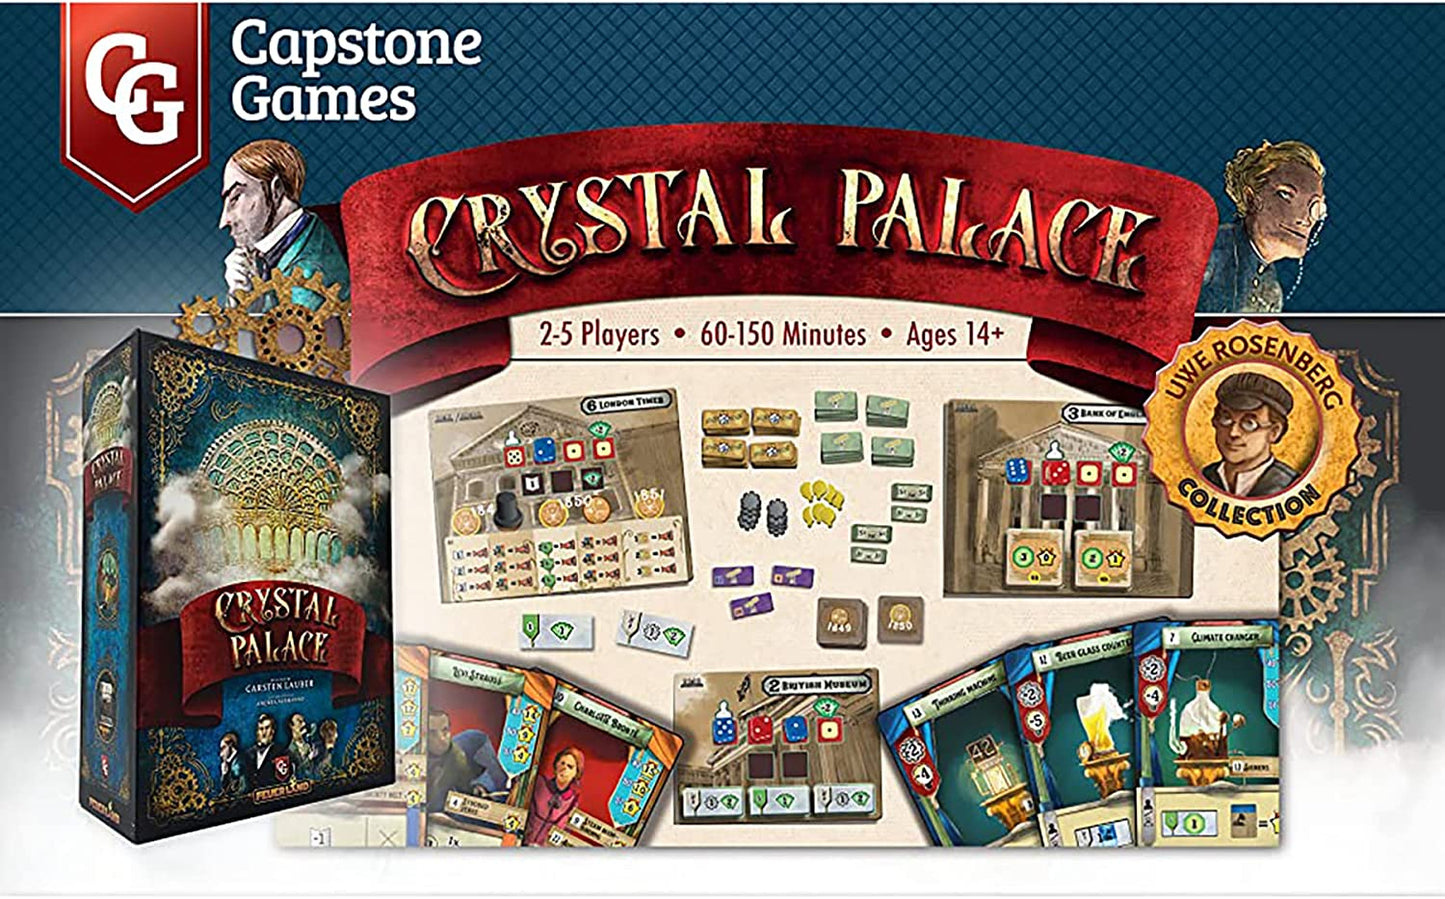 Crystal Palace info sheet